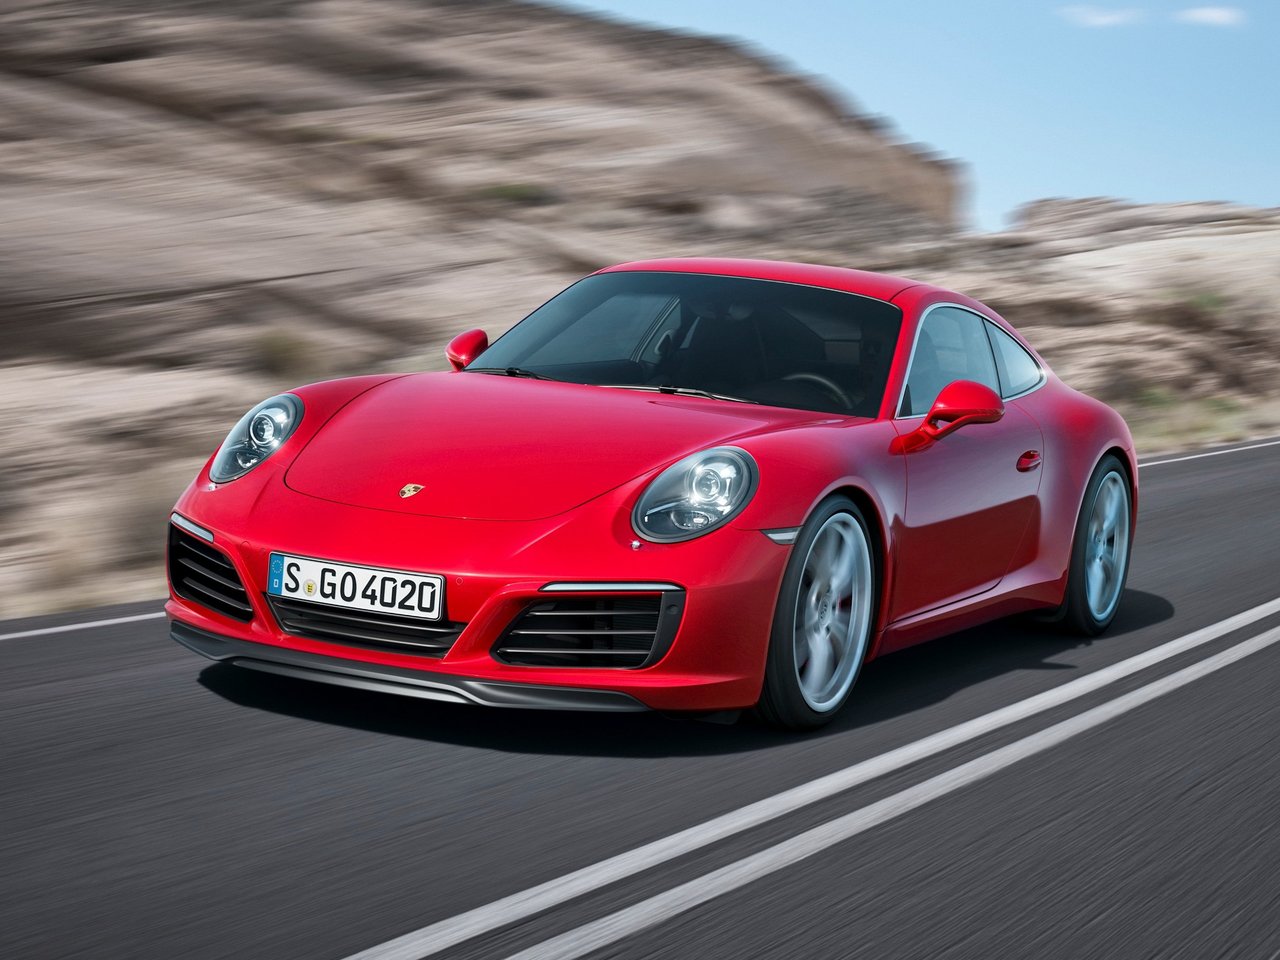 Расход газа трёх комплектаций купе Porsche 911. Разница стоимости заправки газом и бензином. Автономный пробег до и после установки ГБО.